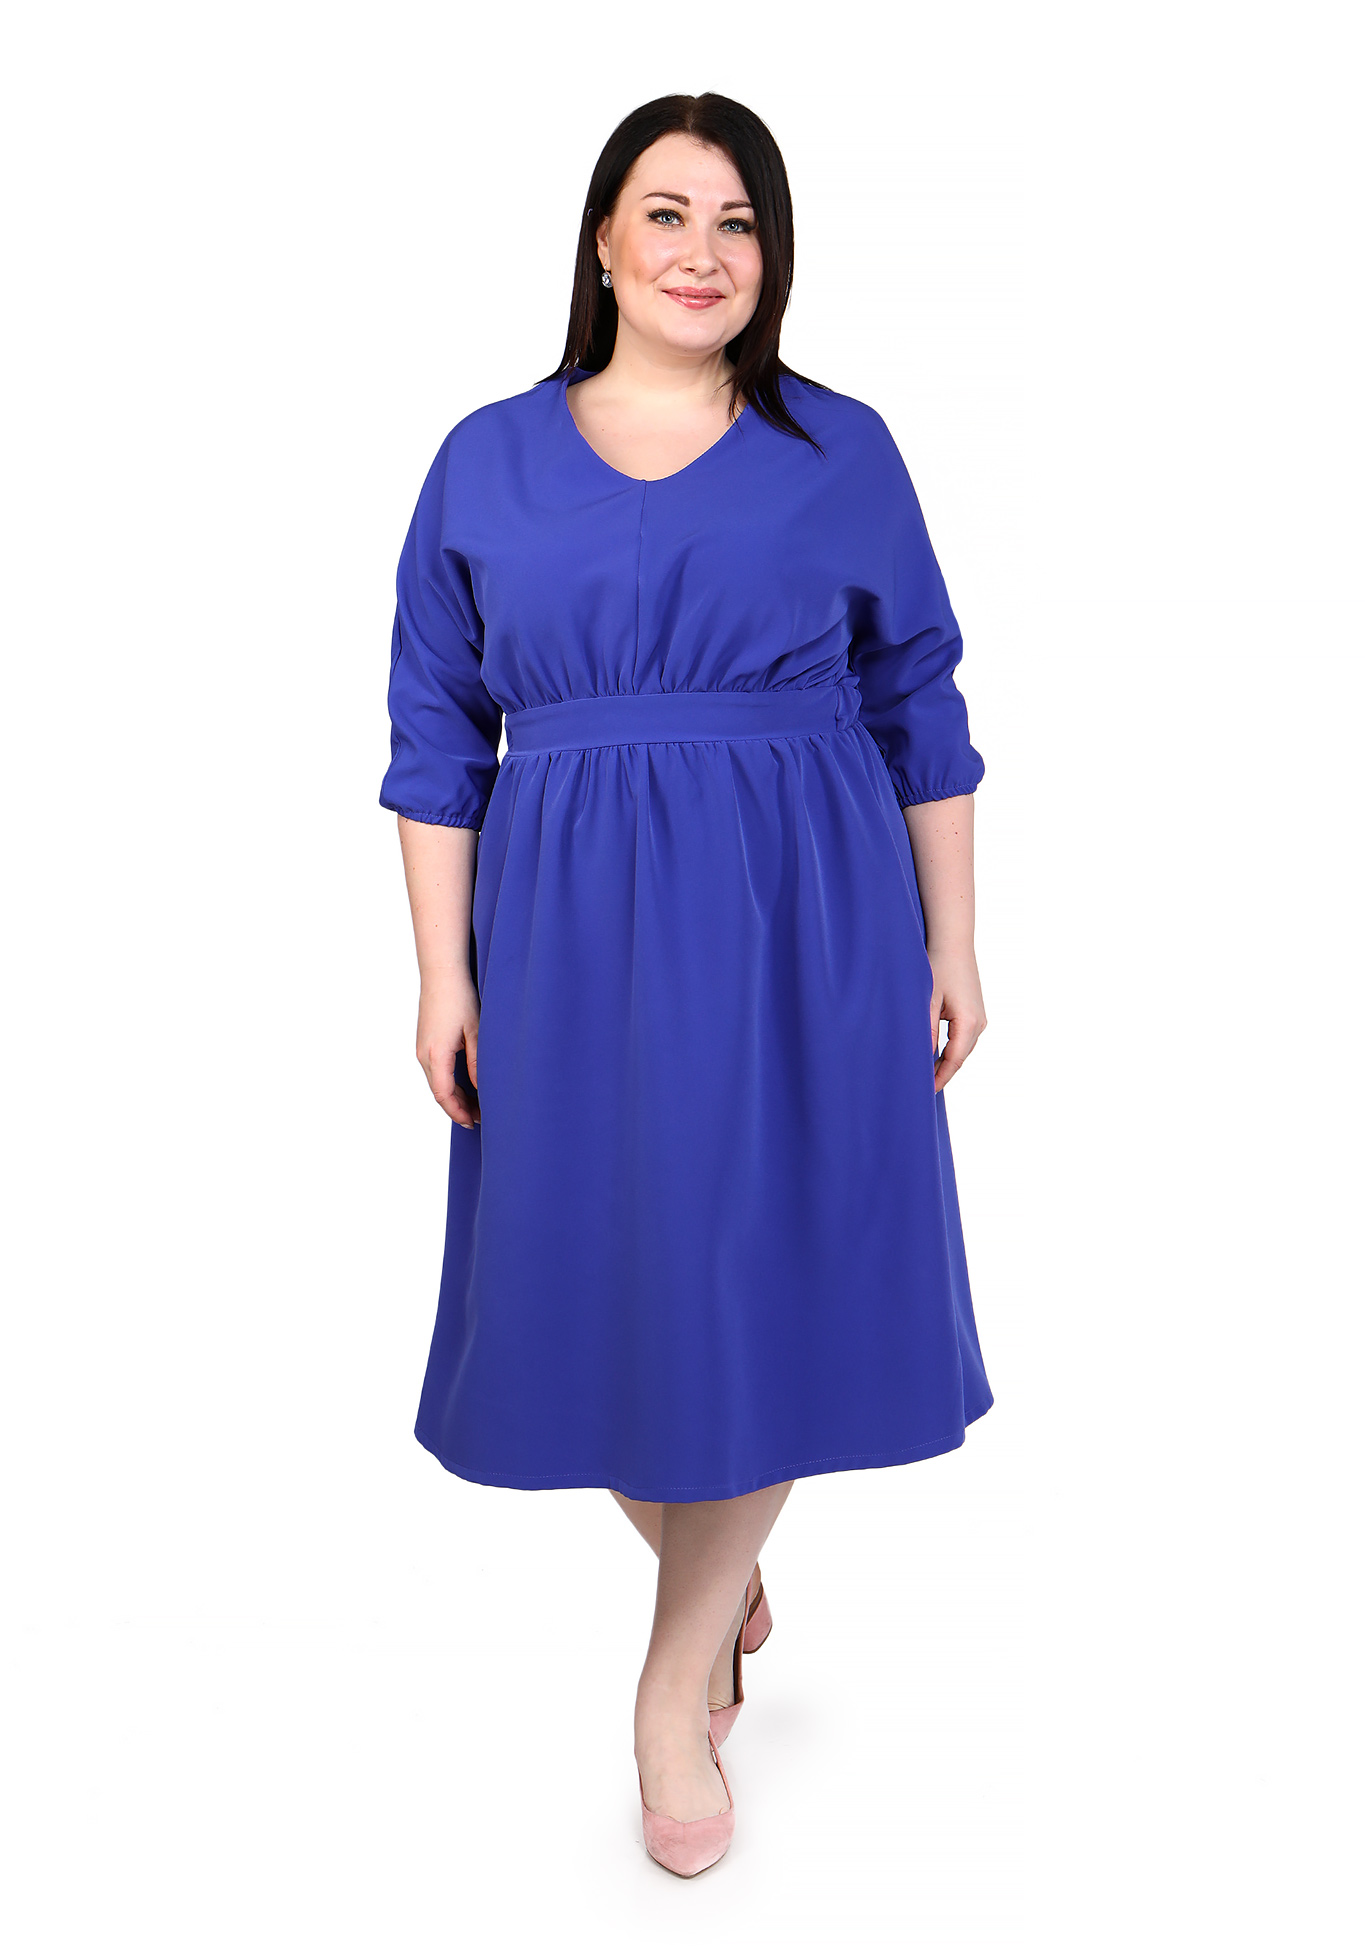 Платье "Чарующая красота" Vivienne Mare, размер 52, цвет сиреневый - фото 4